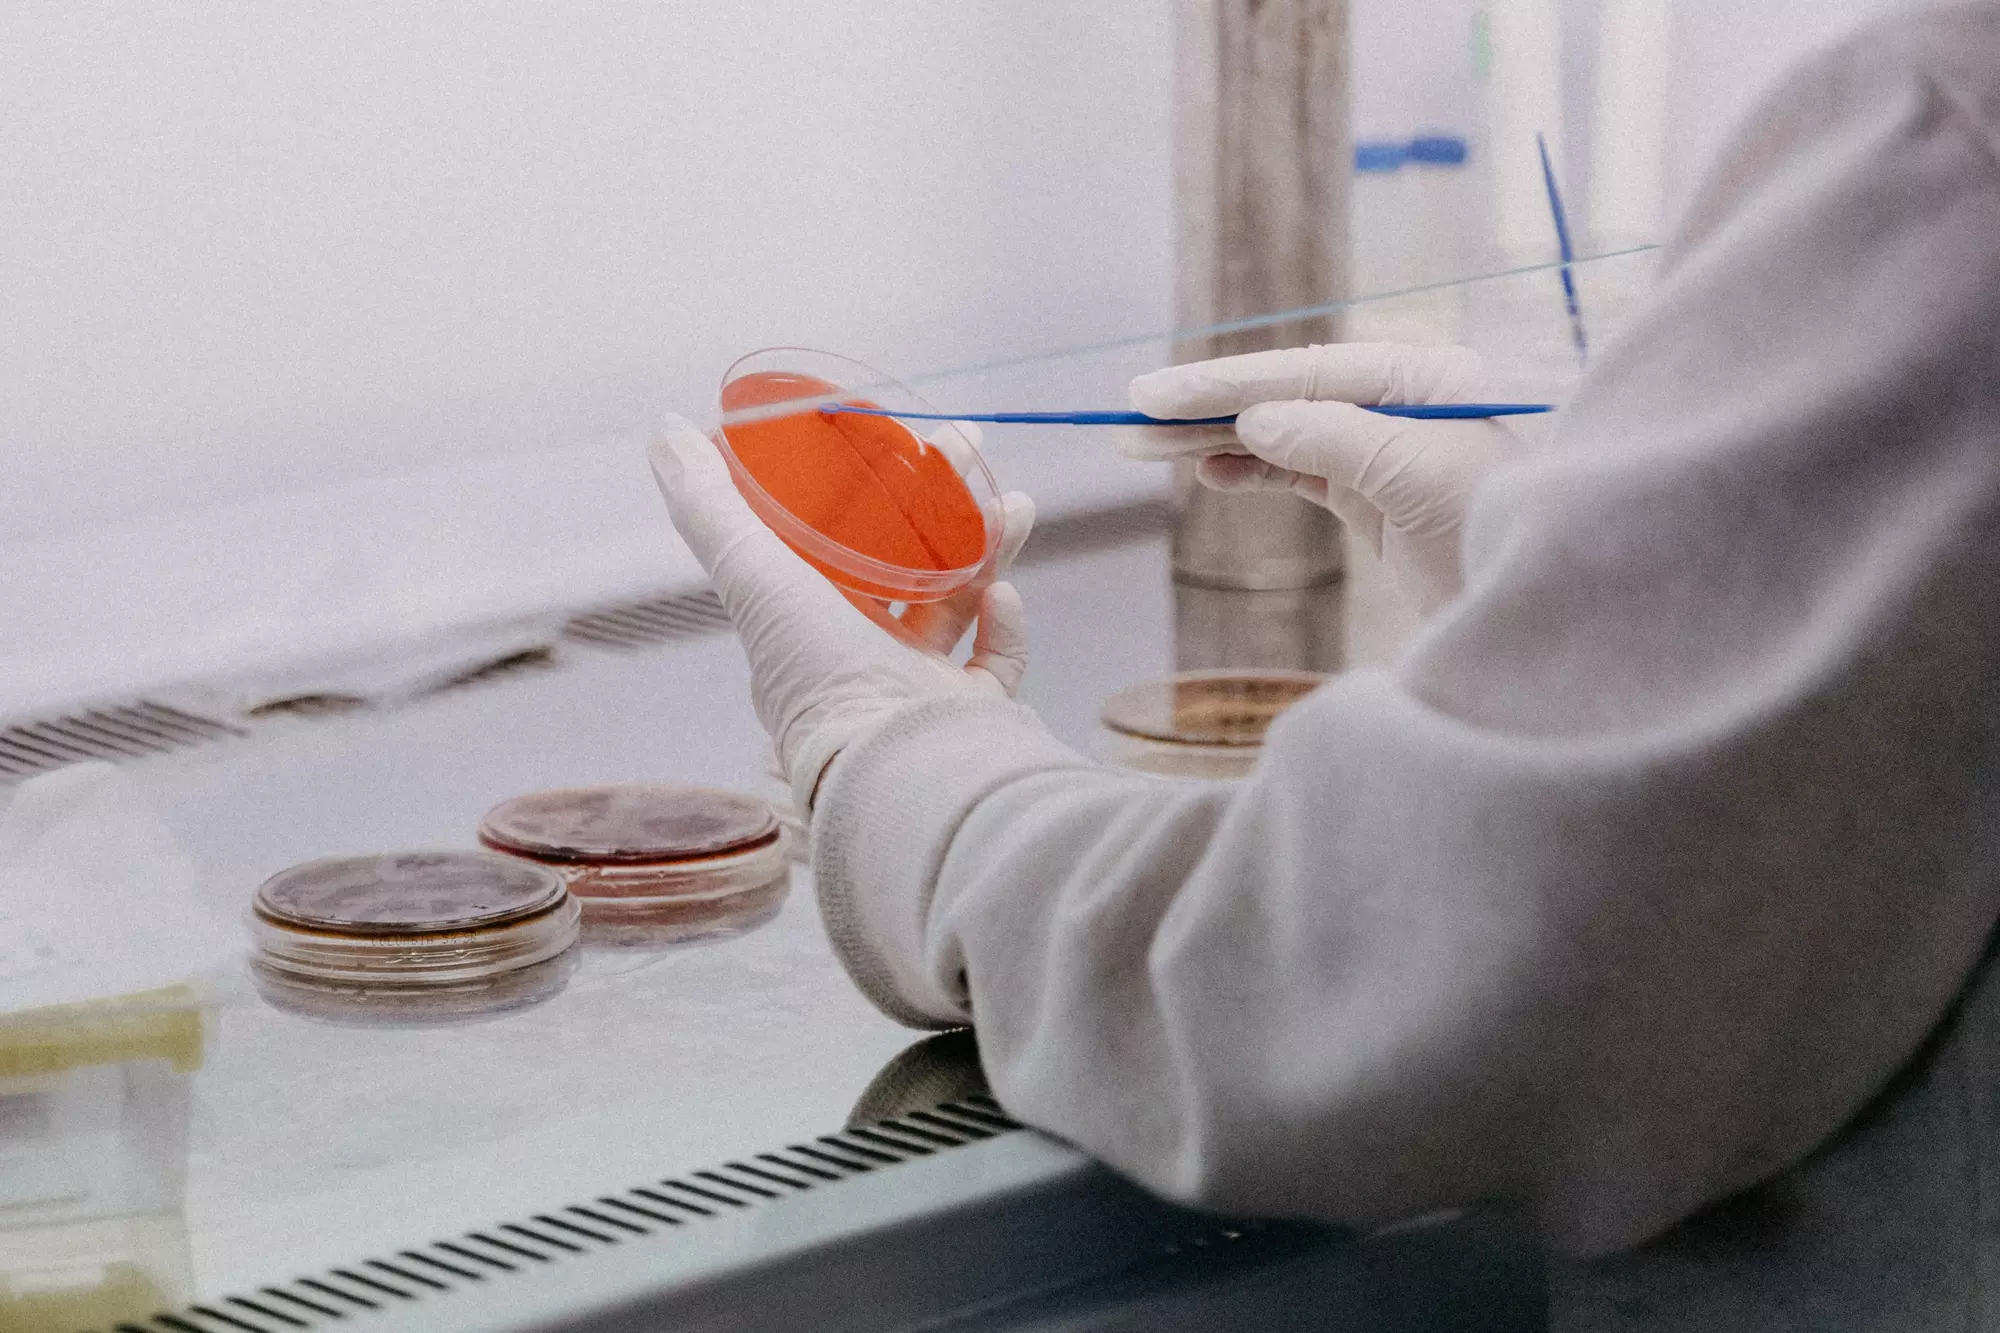 scientist examining cell culture dish